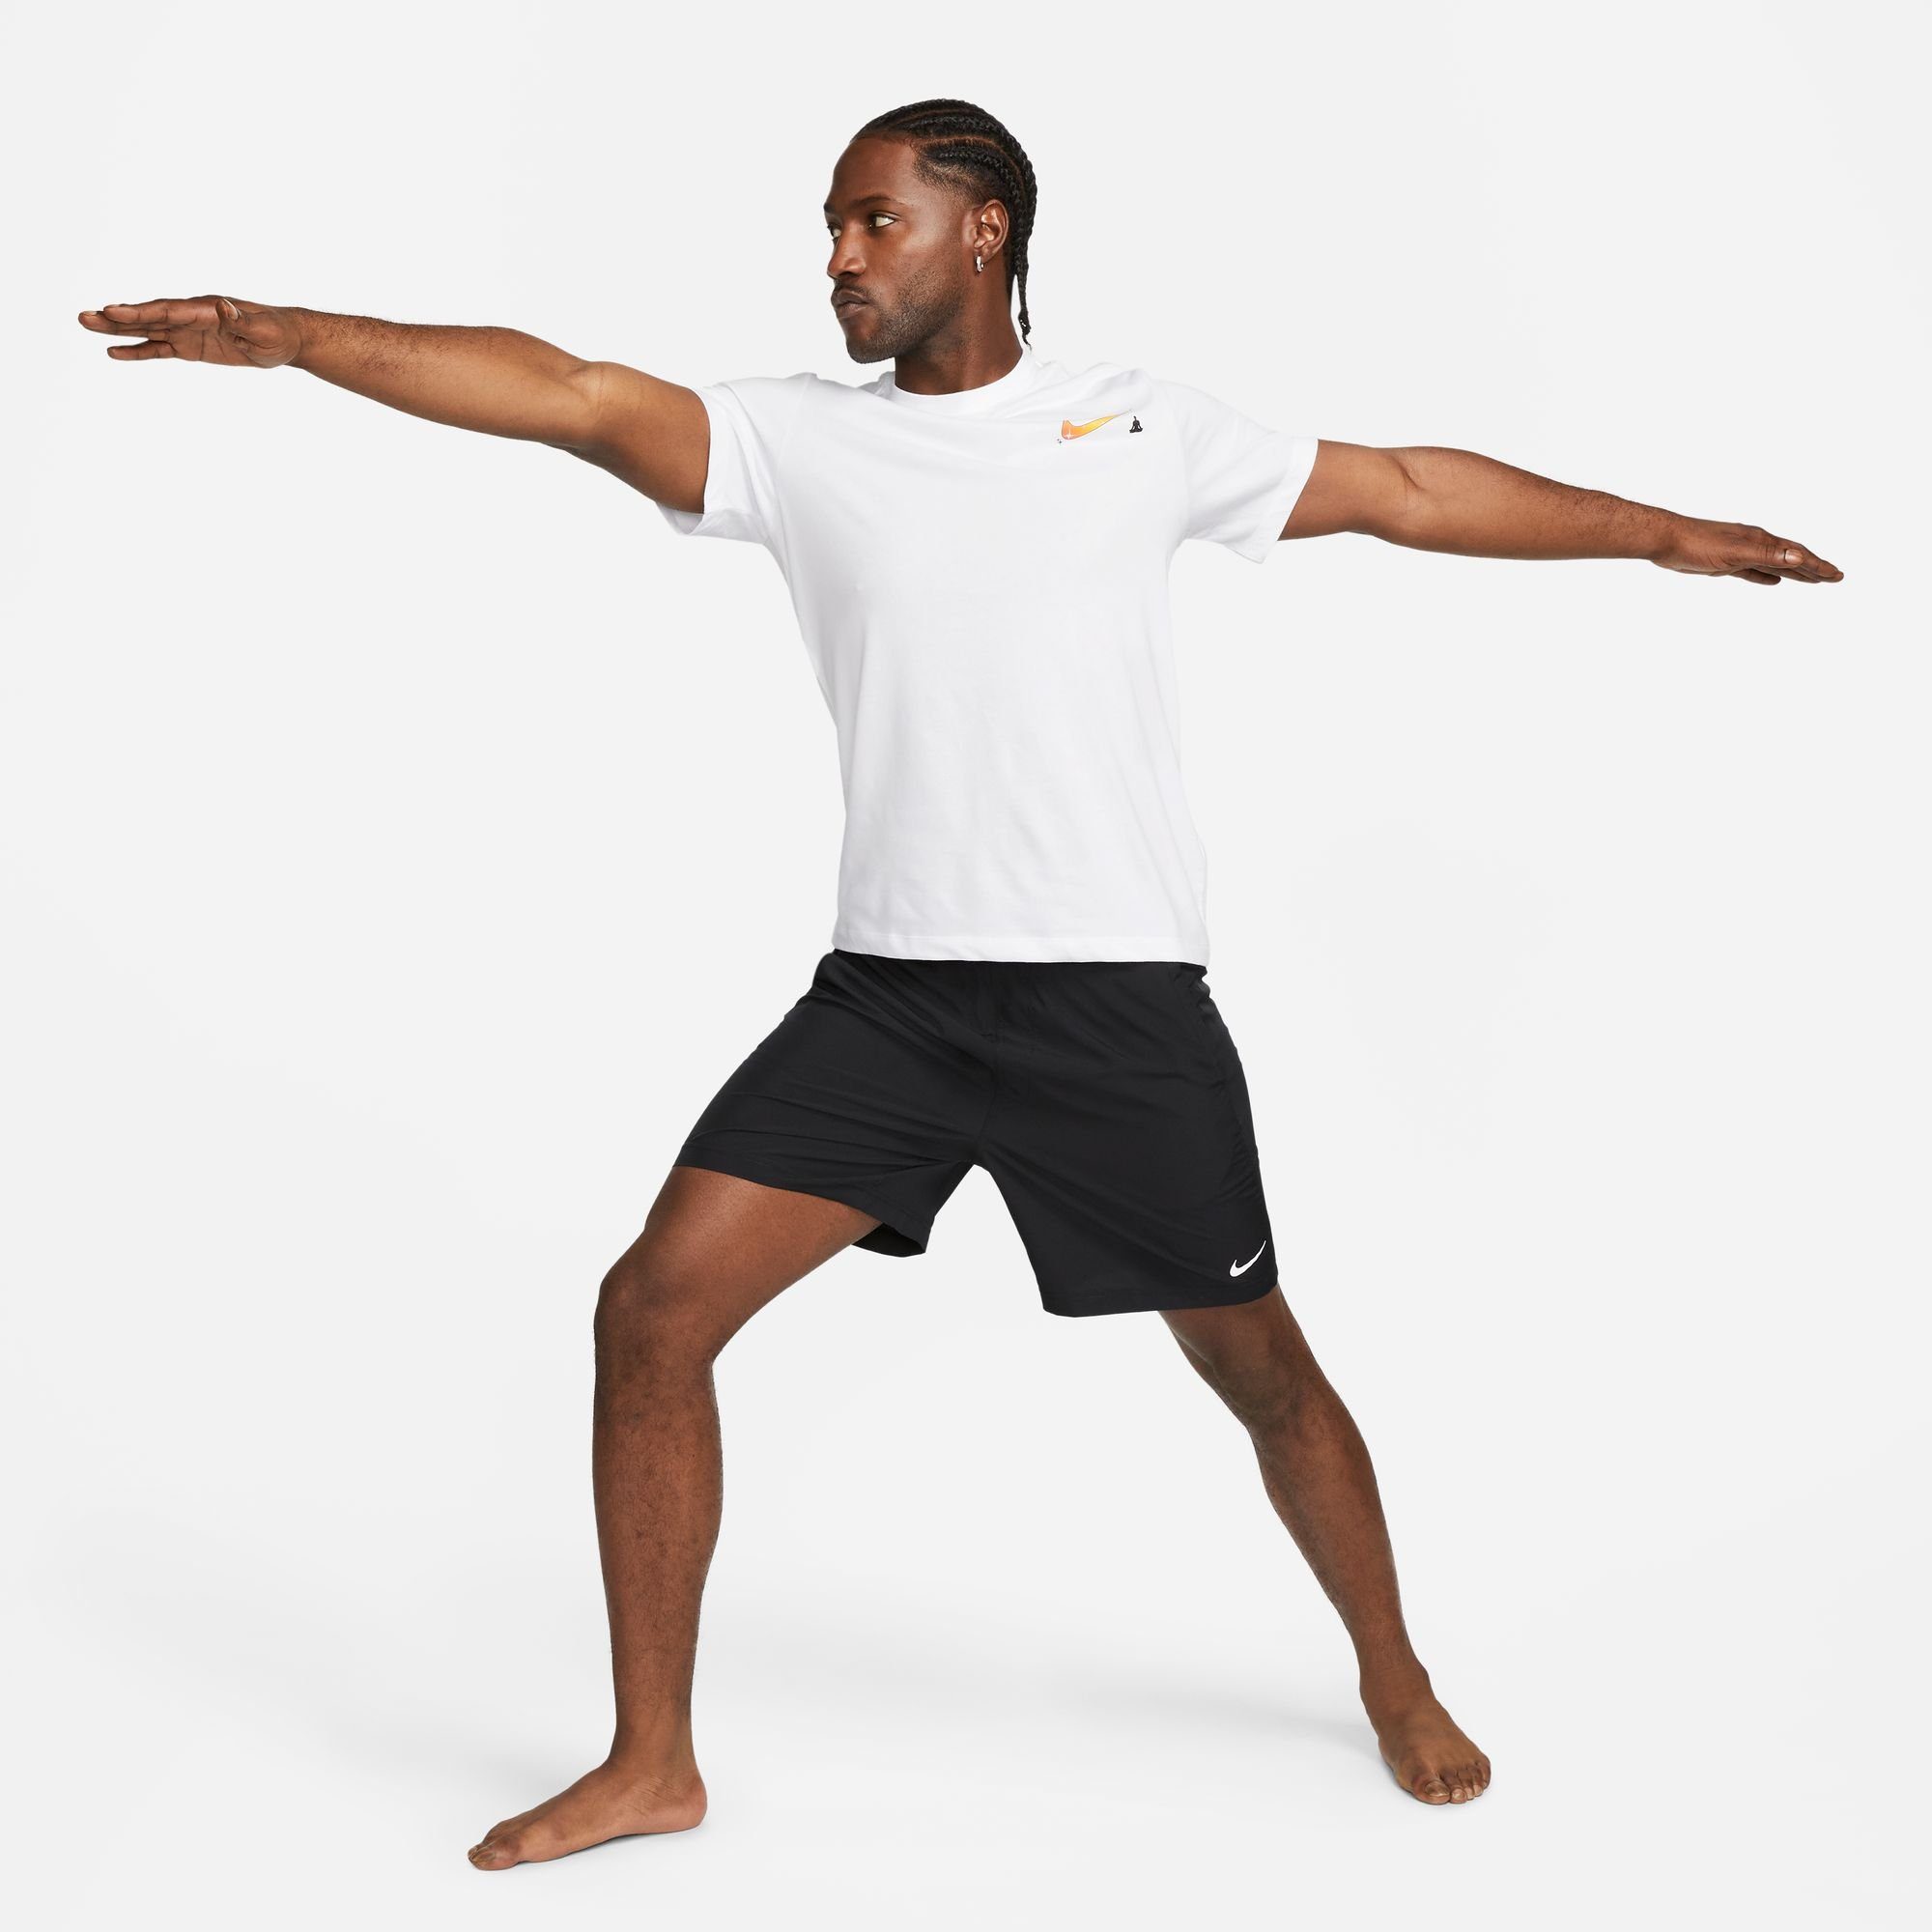 SHORTS MEN'S DRI-FIT UNLINED schwarz FORM Nike VERSATILE Trainingsshorts